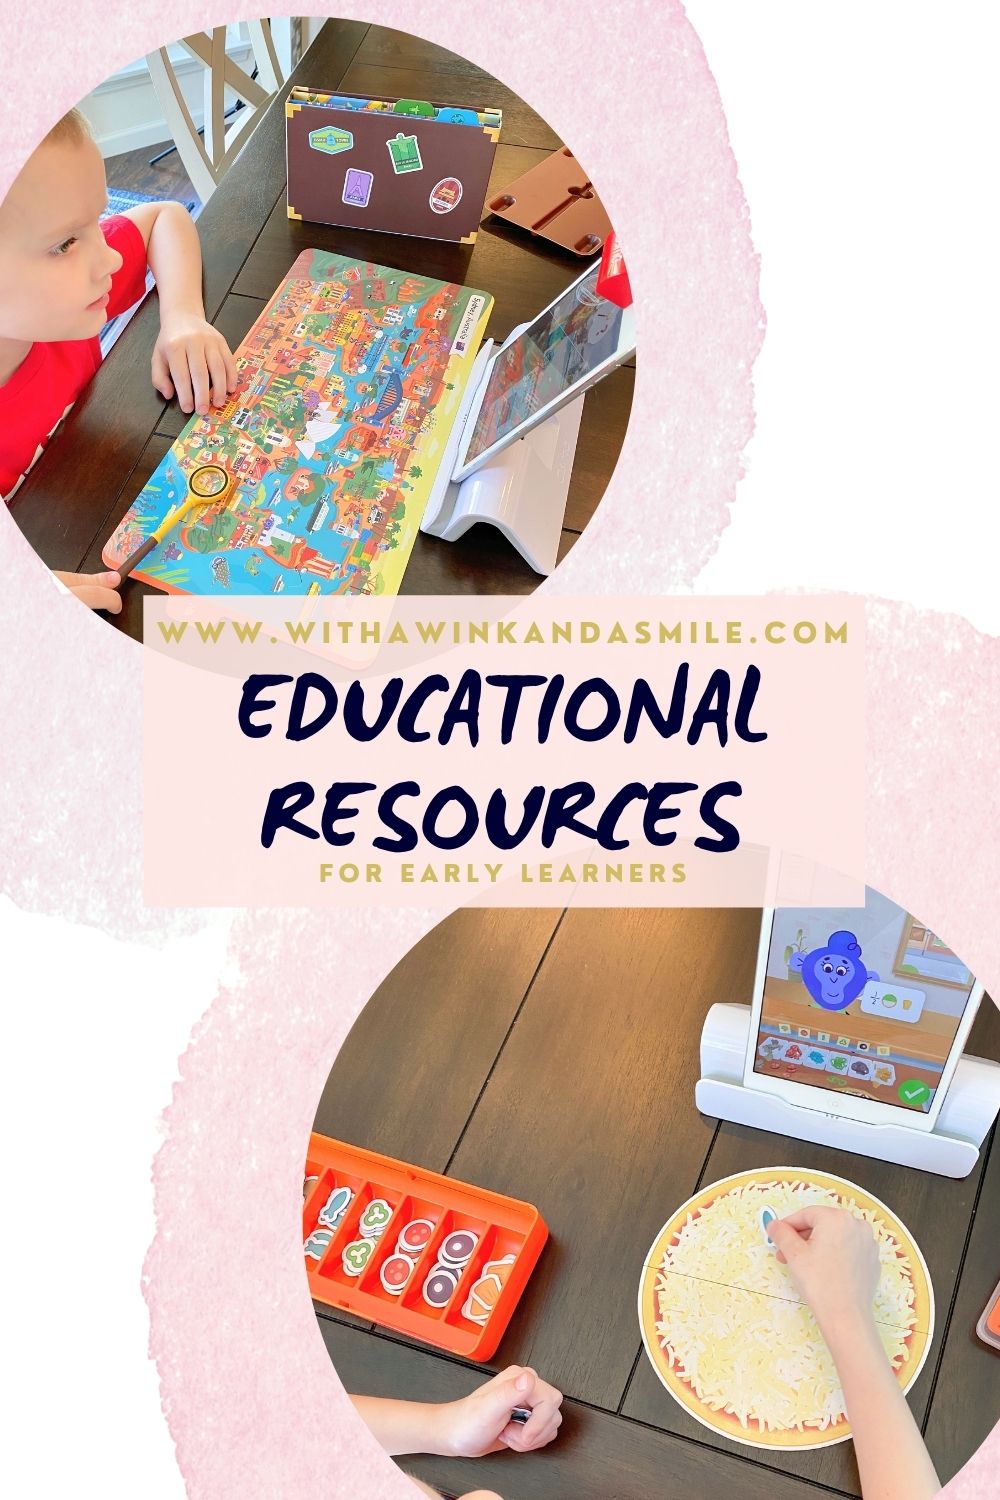 Play Osmo
Educational Learning
Resources
Homeschool
Preschool